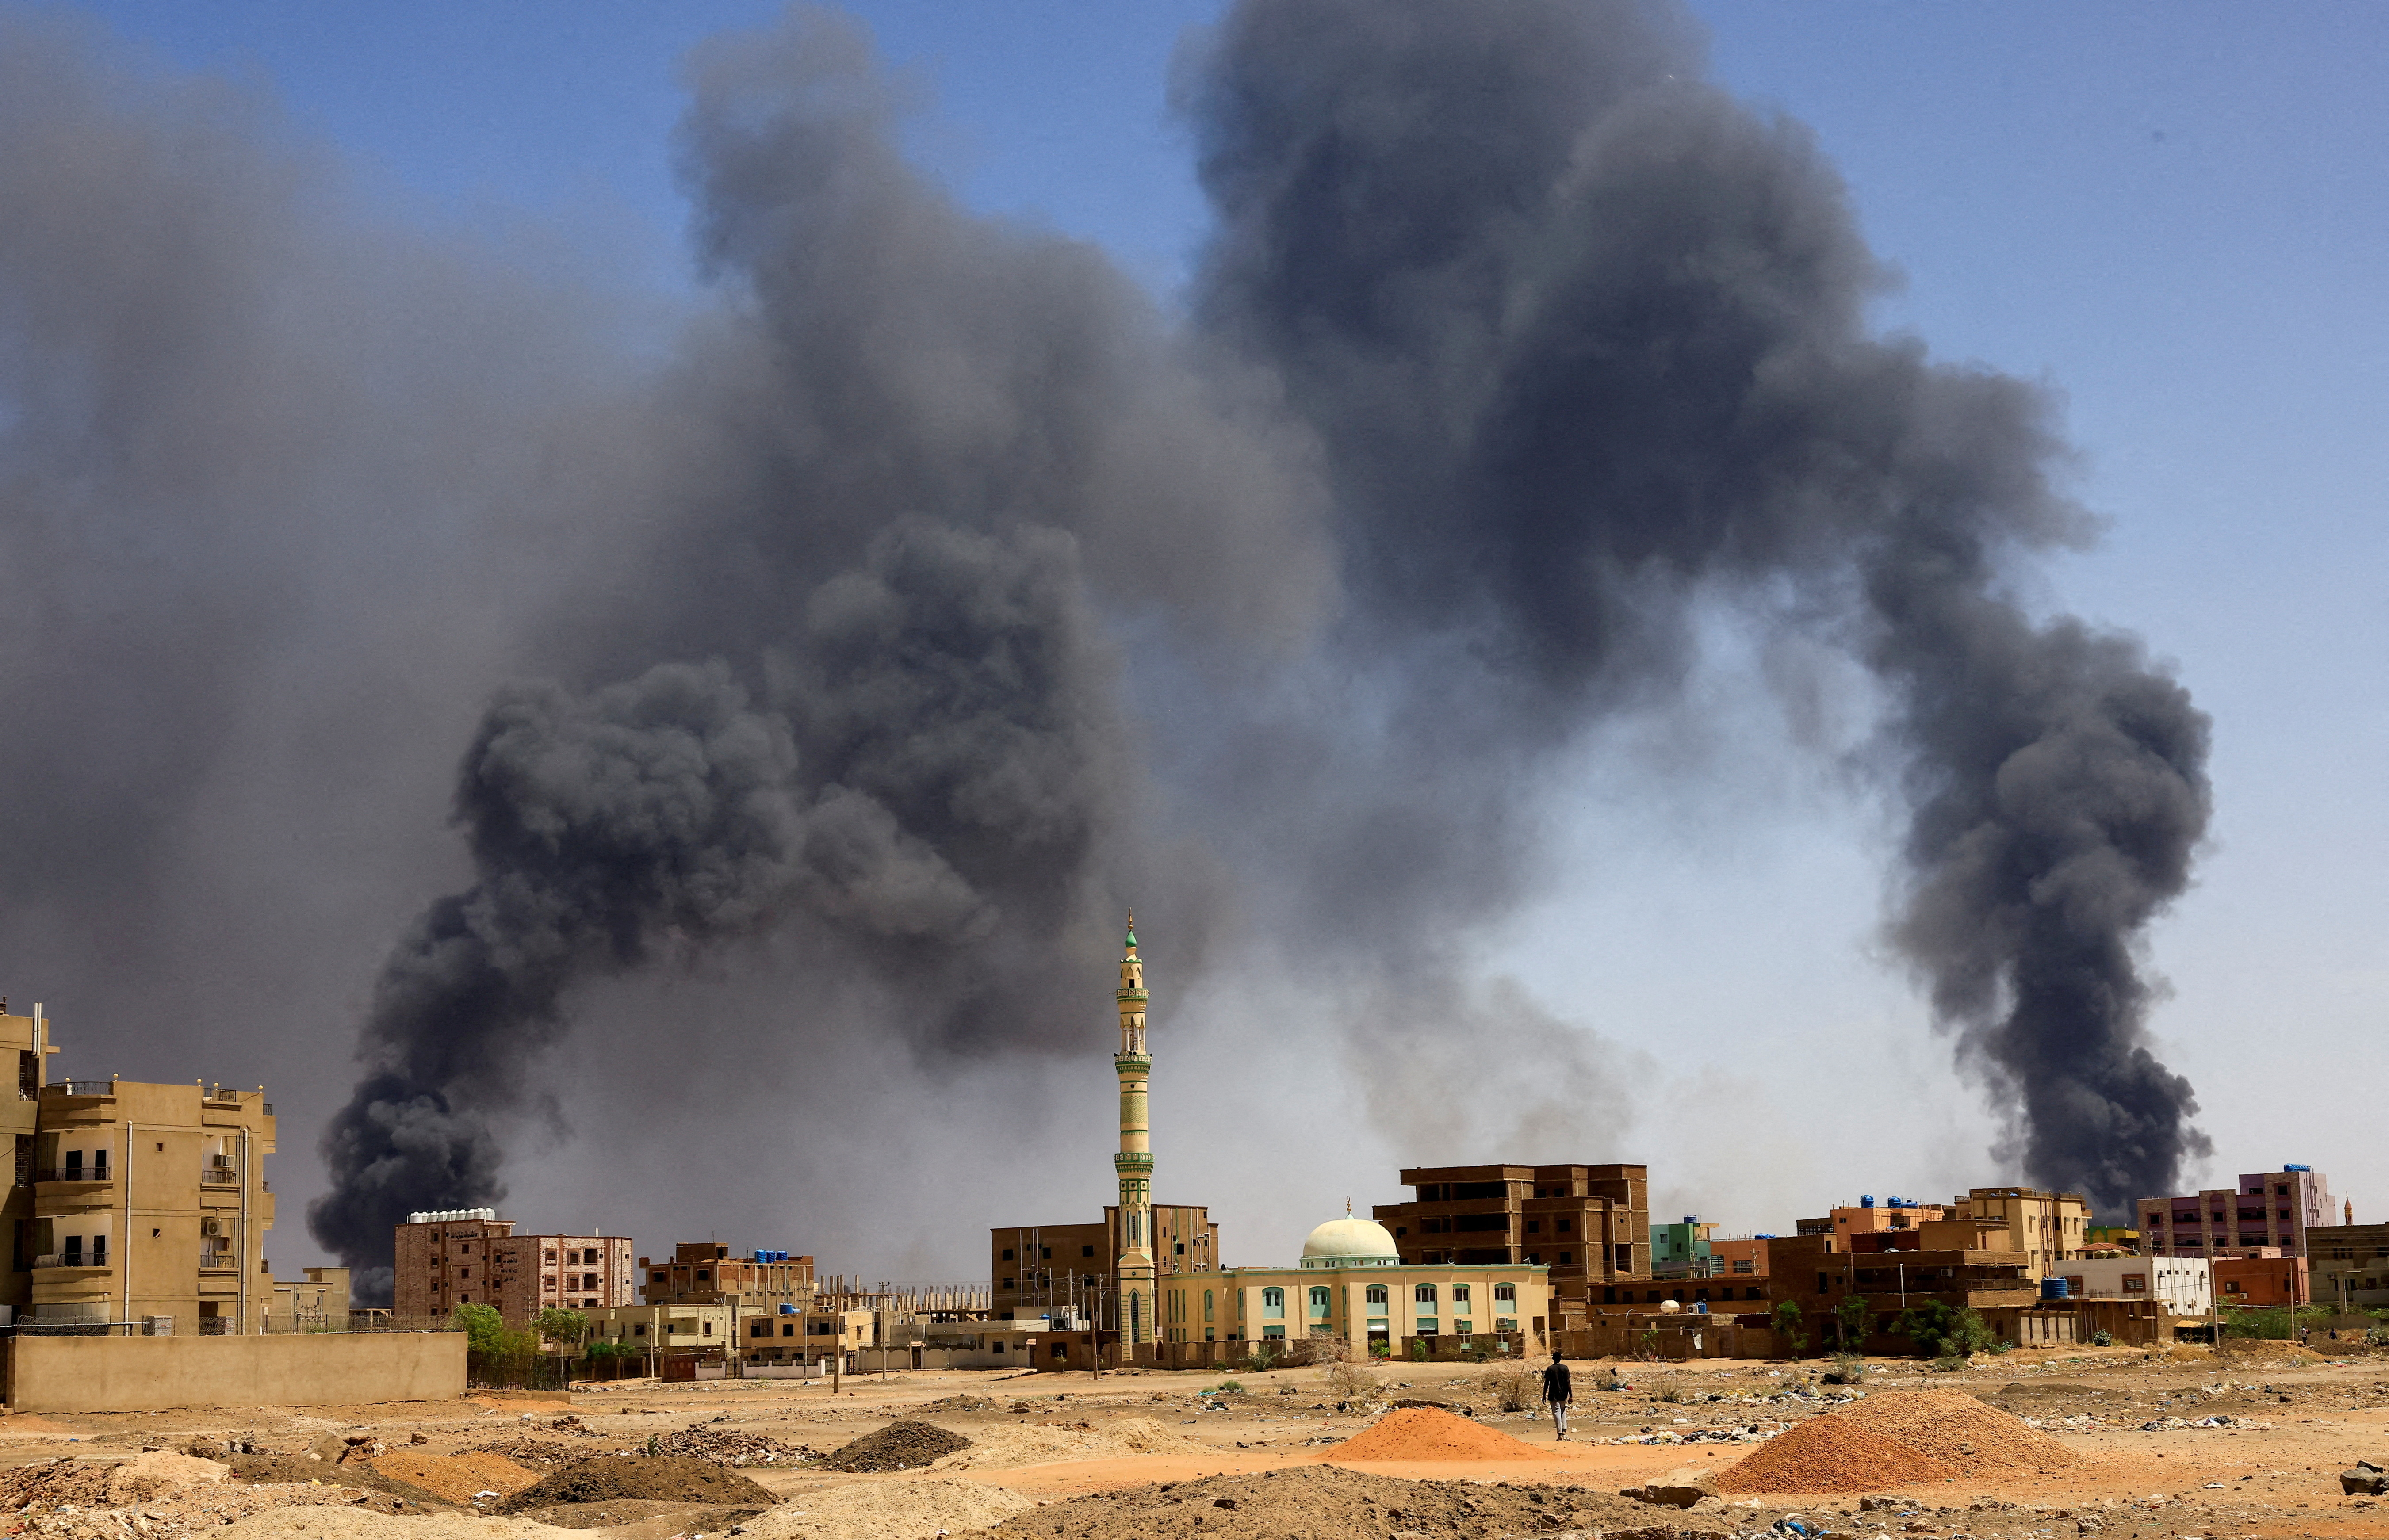 UN-brokered Sudan ceasefire talks begin with one party no-show